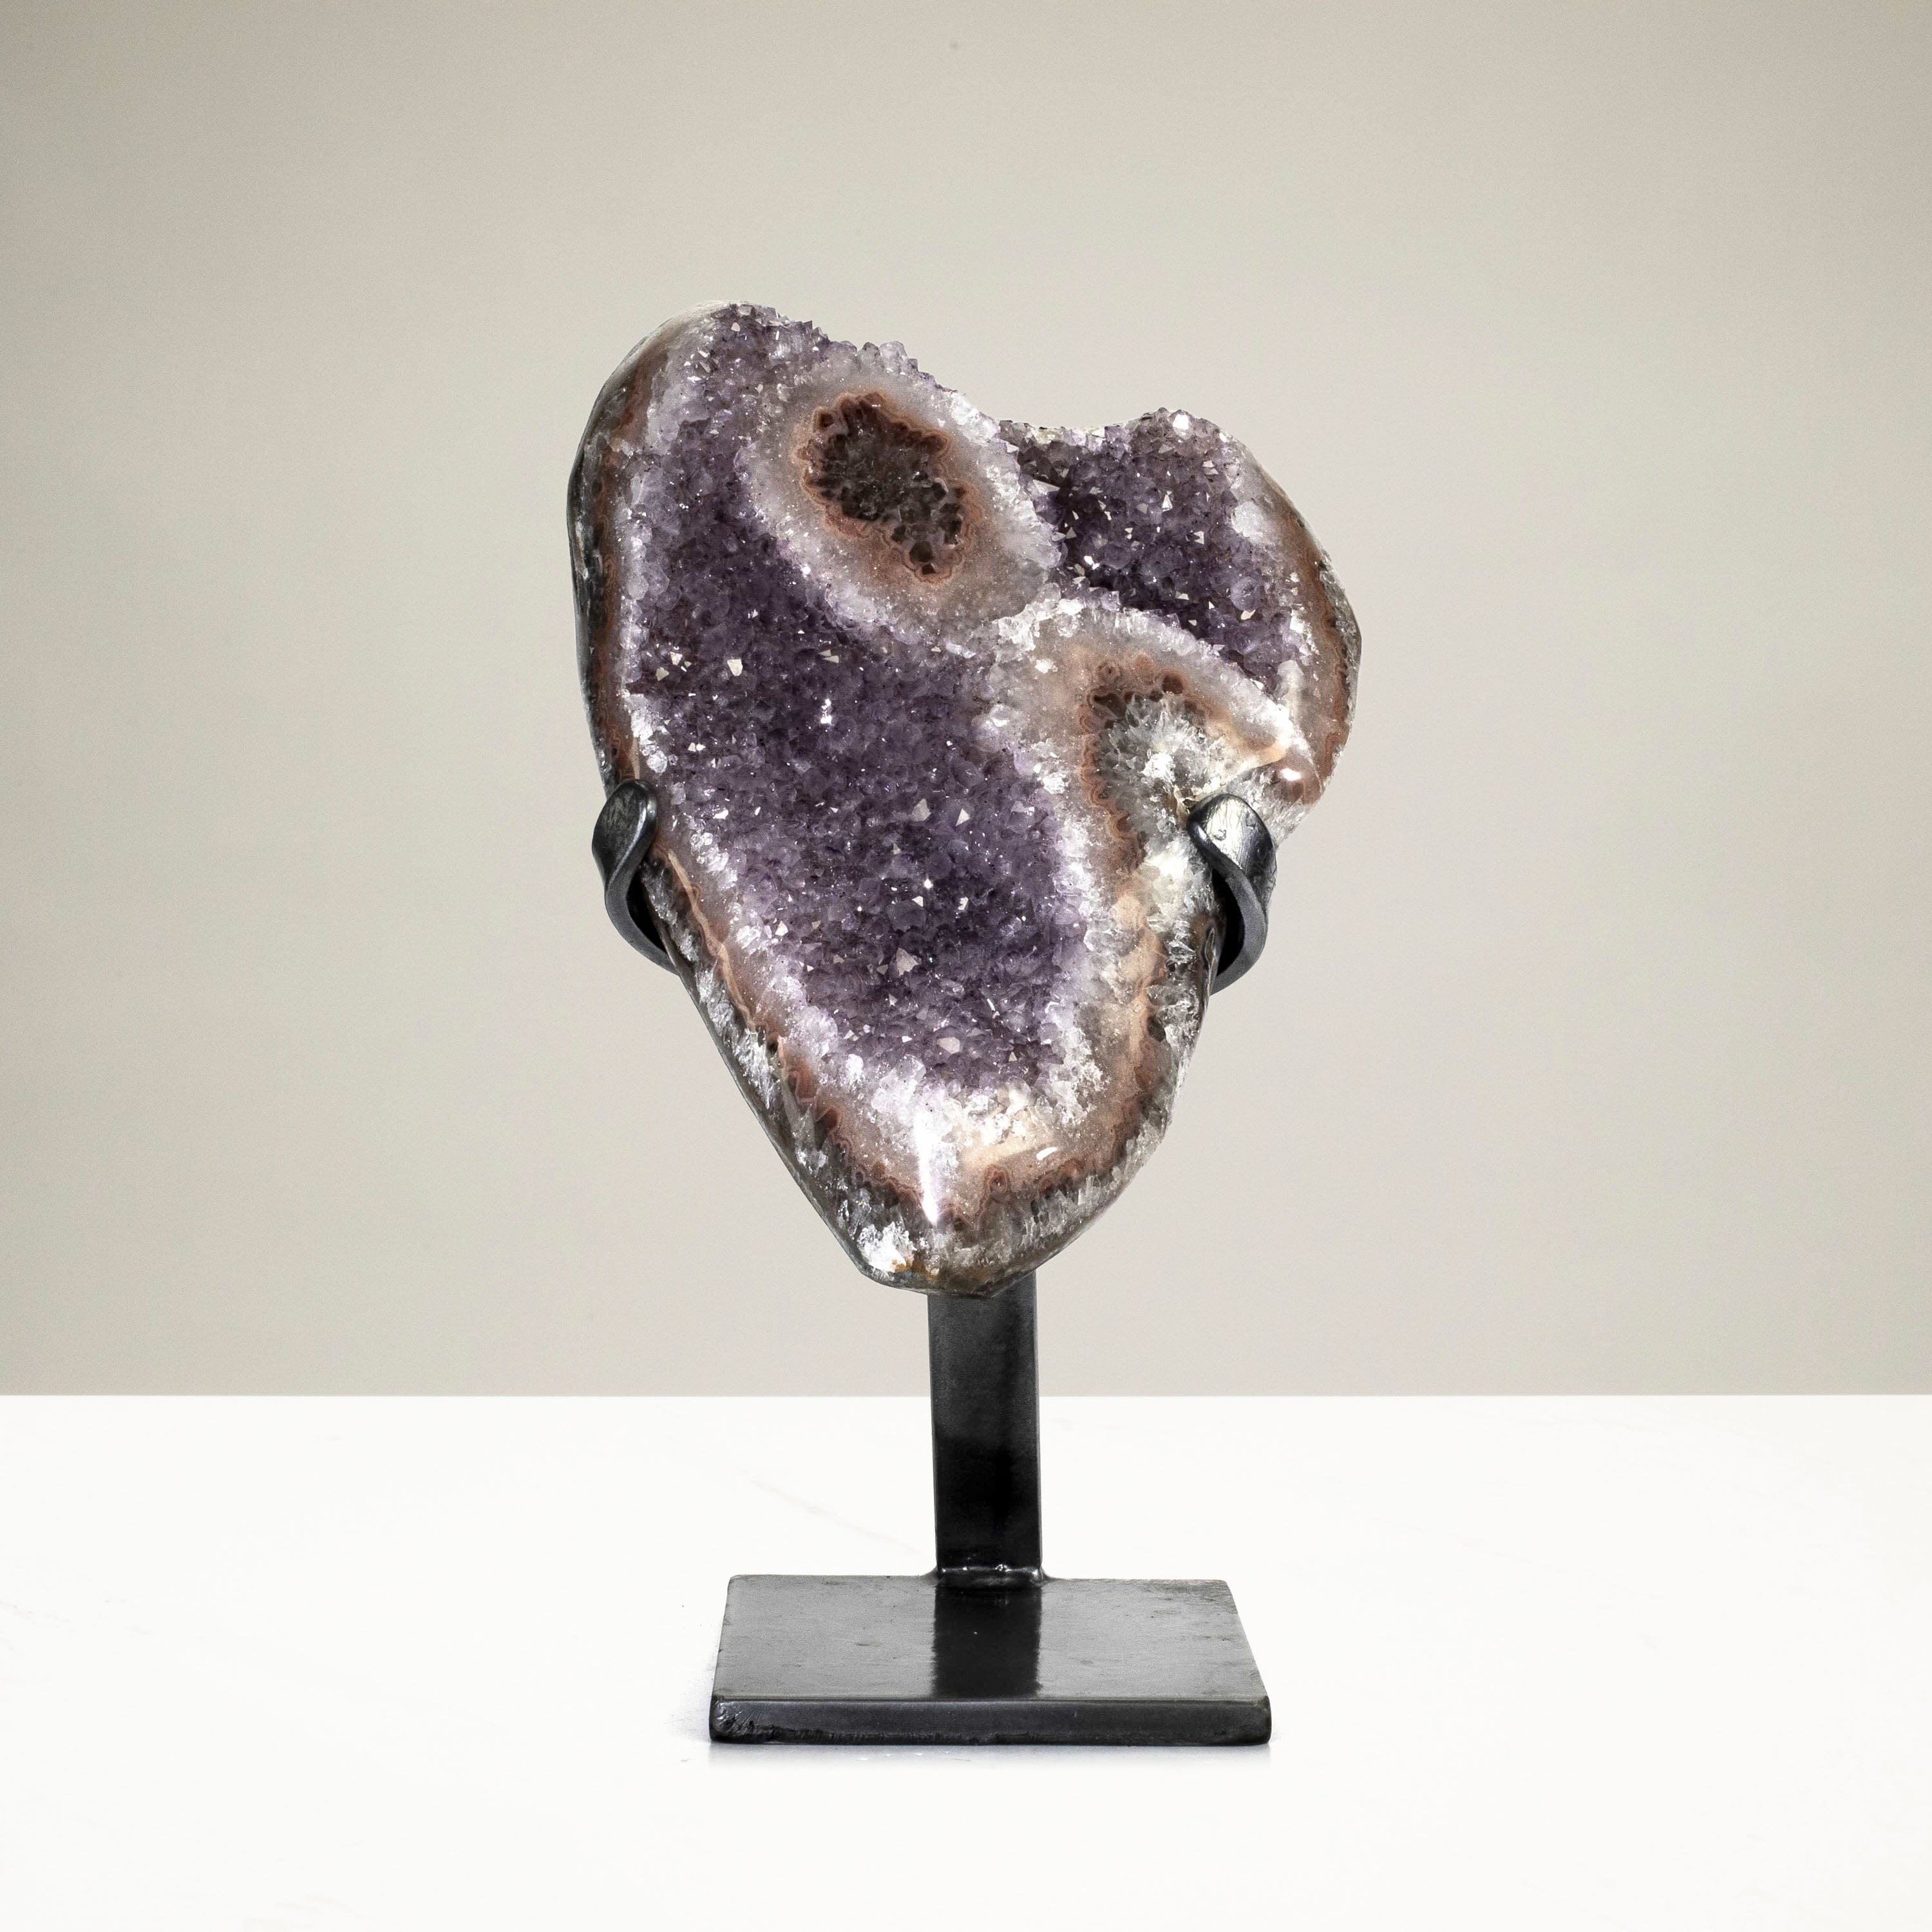 Kalifano Amethyst Uruguayan Amethyst Geode on Custom Stand - 22.7 lbs / 15 in. UAG4600.004